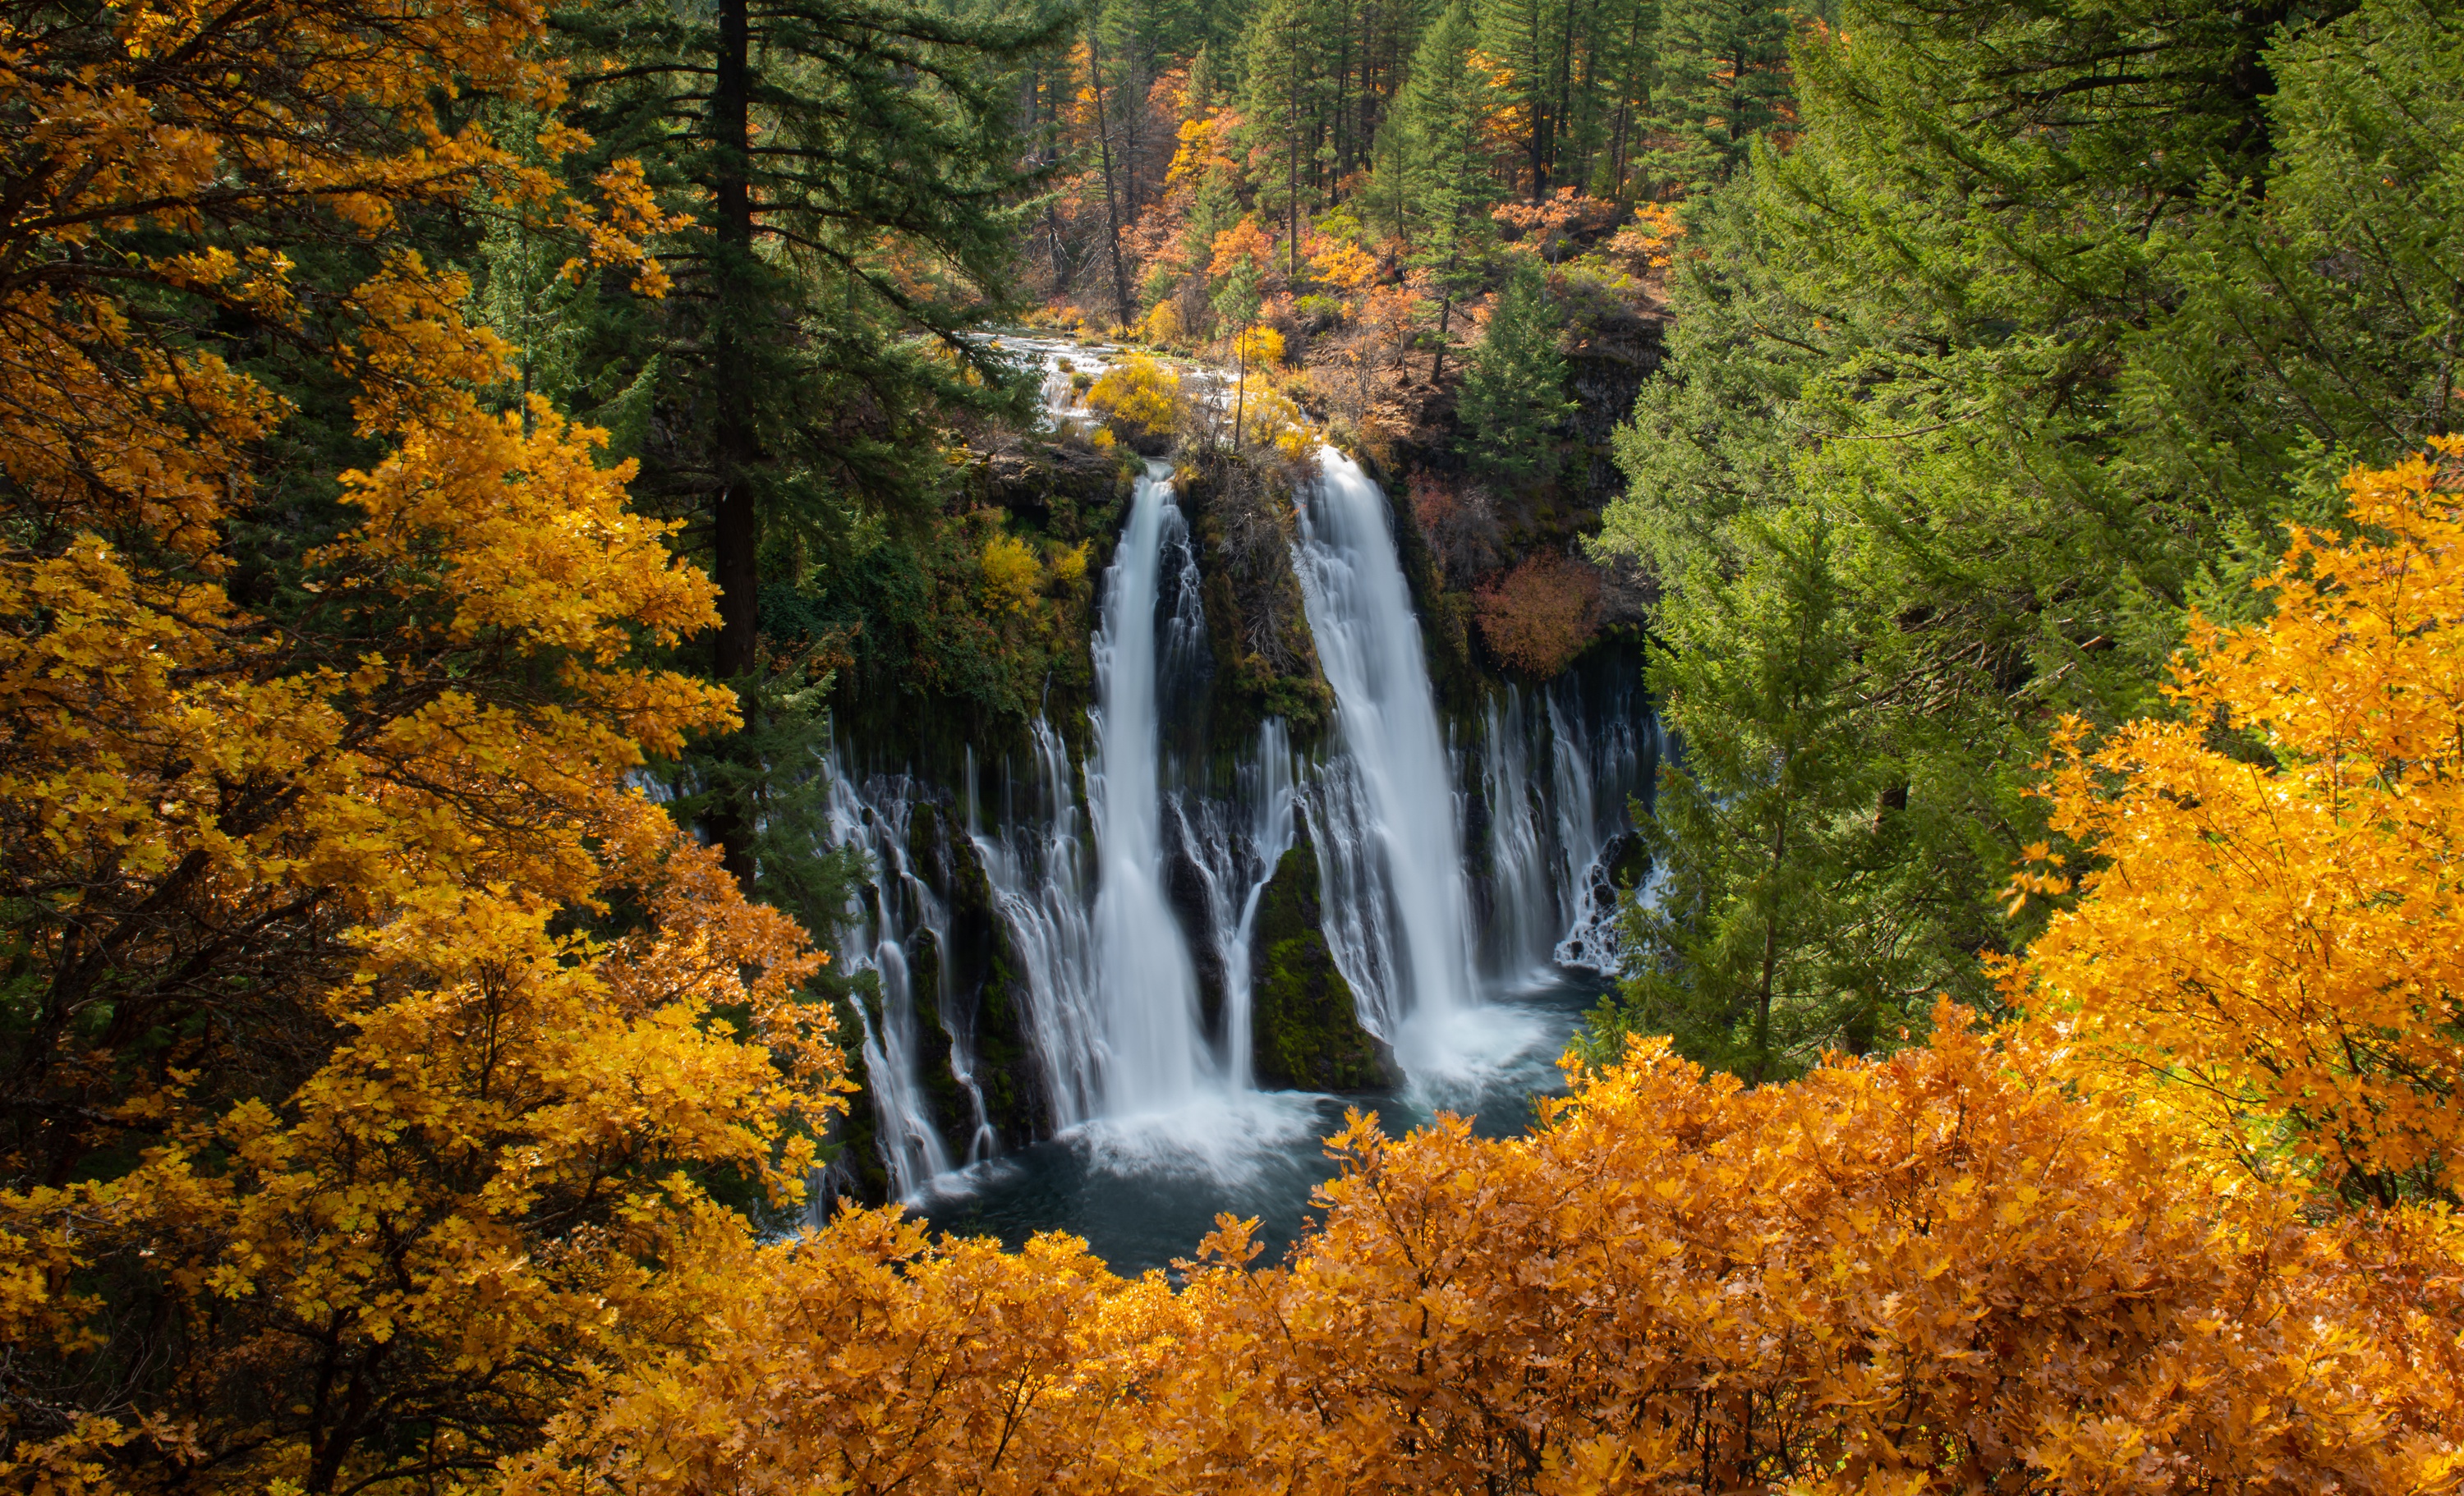 Descarga gratis la imagen Otoño, Cascadas, Cascada, California, Tierra/naturaleza en el escritorio de tu PC